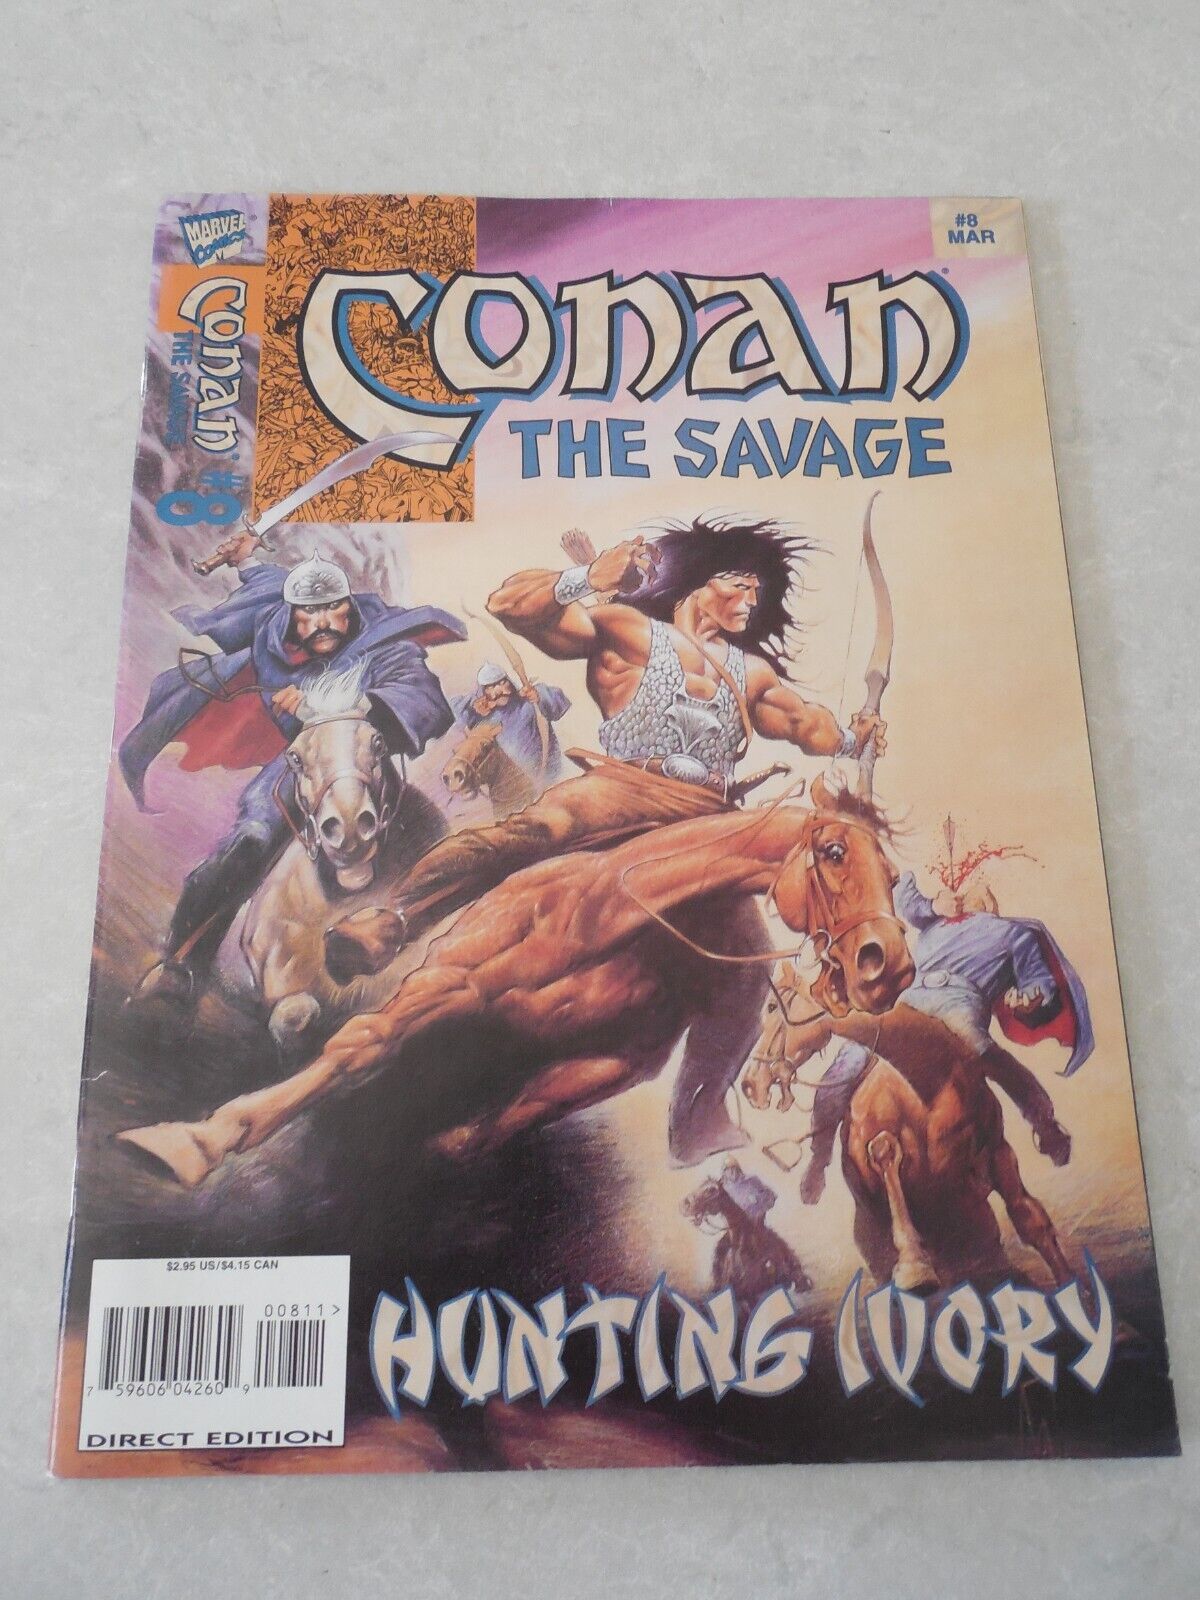 CONAN THE SAVAGE #8, MARVEL COMICS, MARCH 1996, VAL MAYERIK Cover Art!